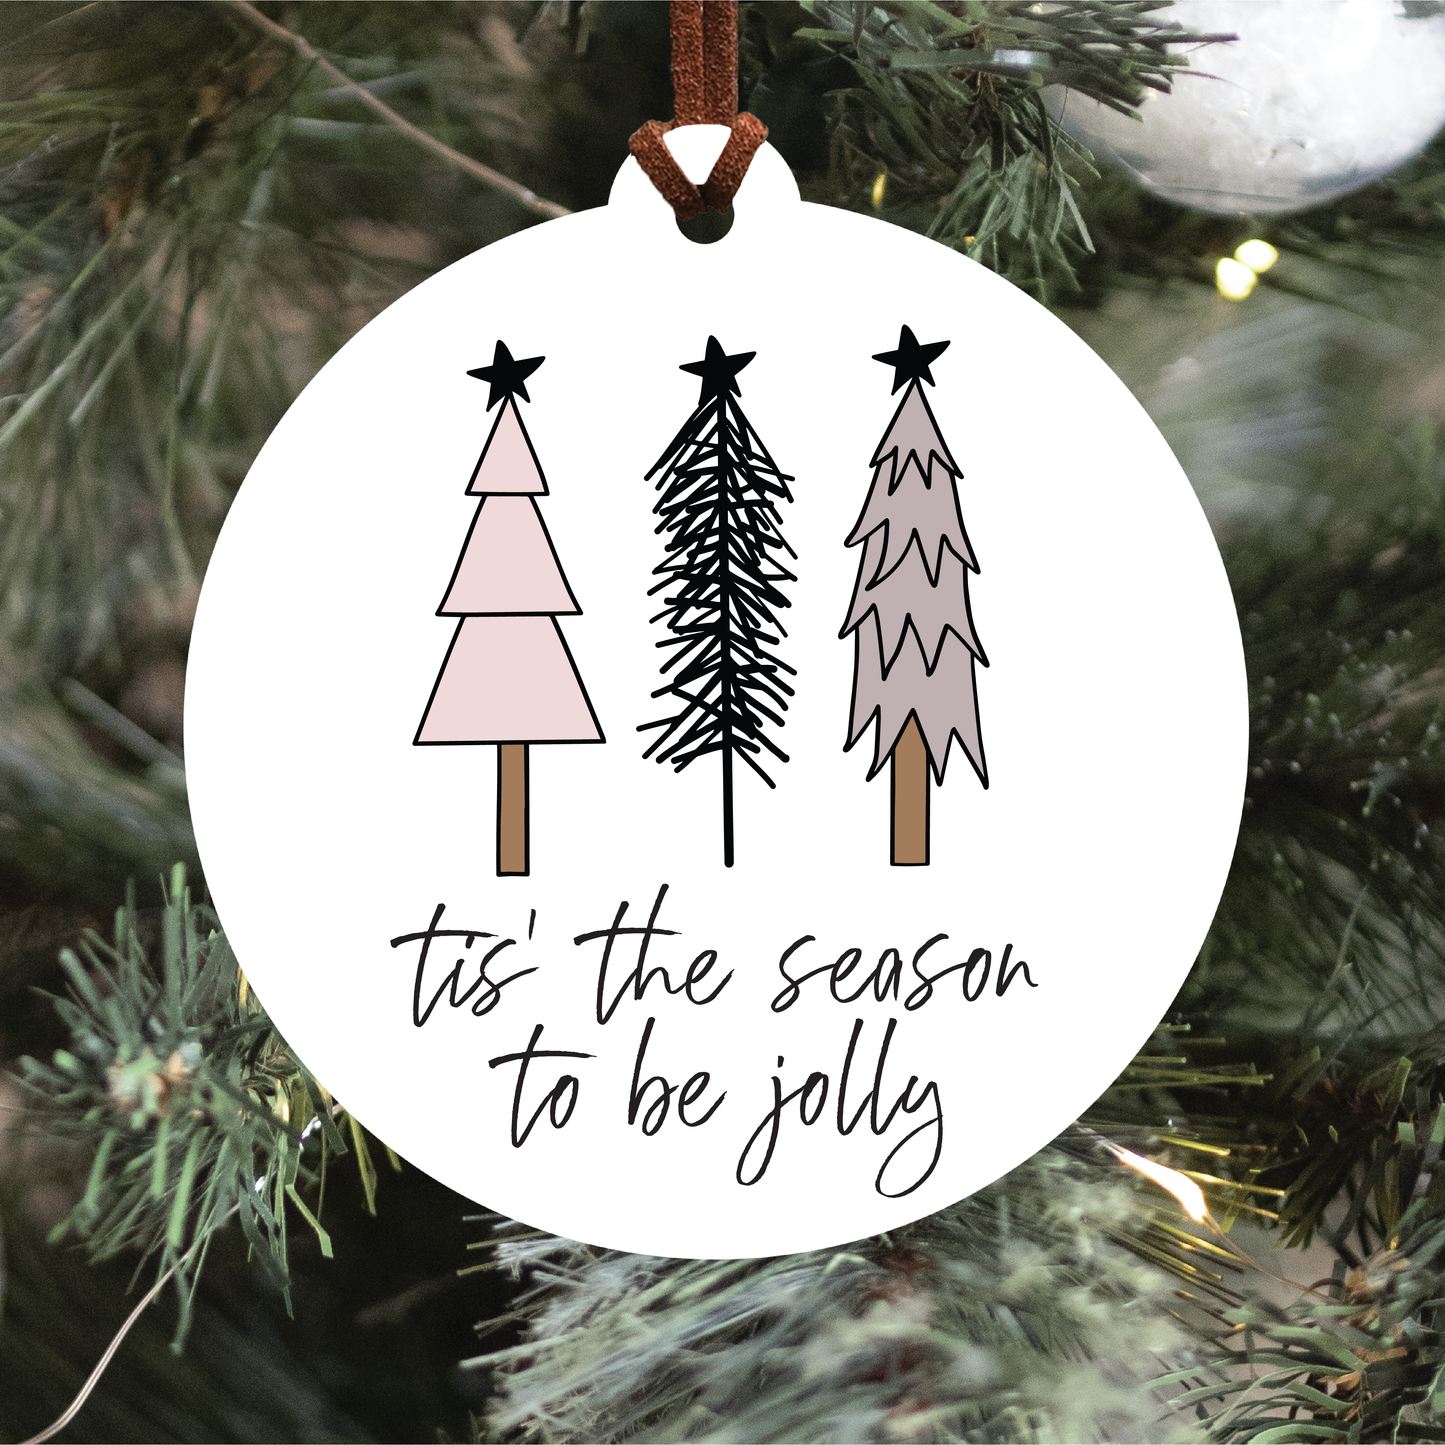 Tis' The Season To Be Jolly Christmas Ornament